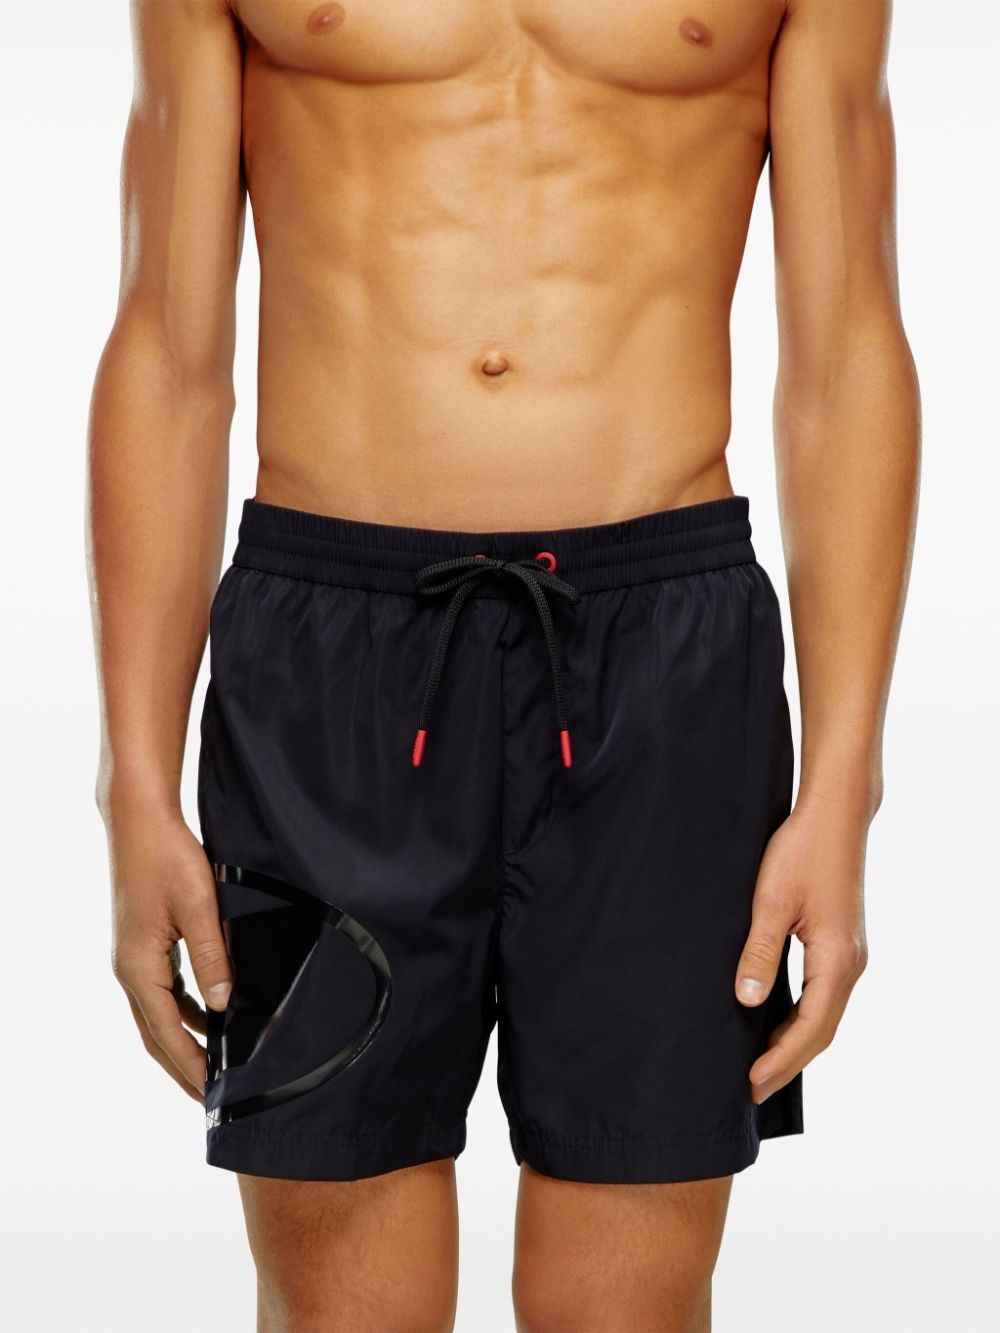 Rio swim shorts - 4